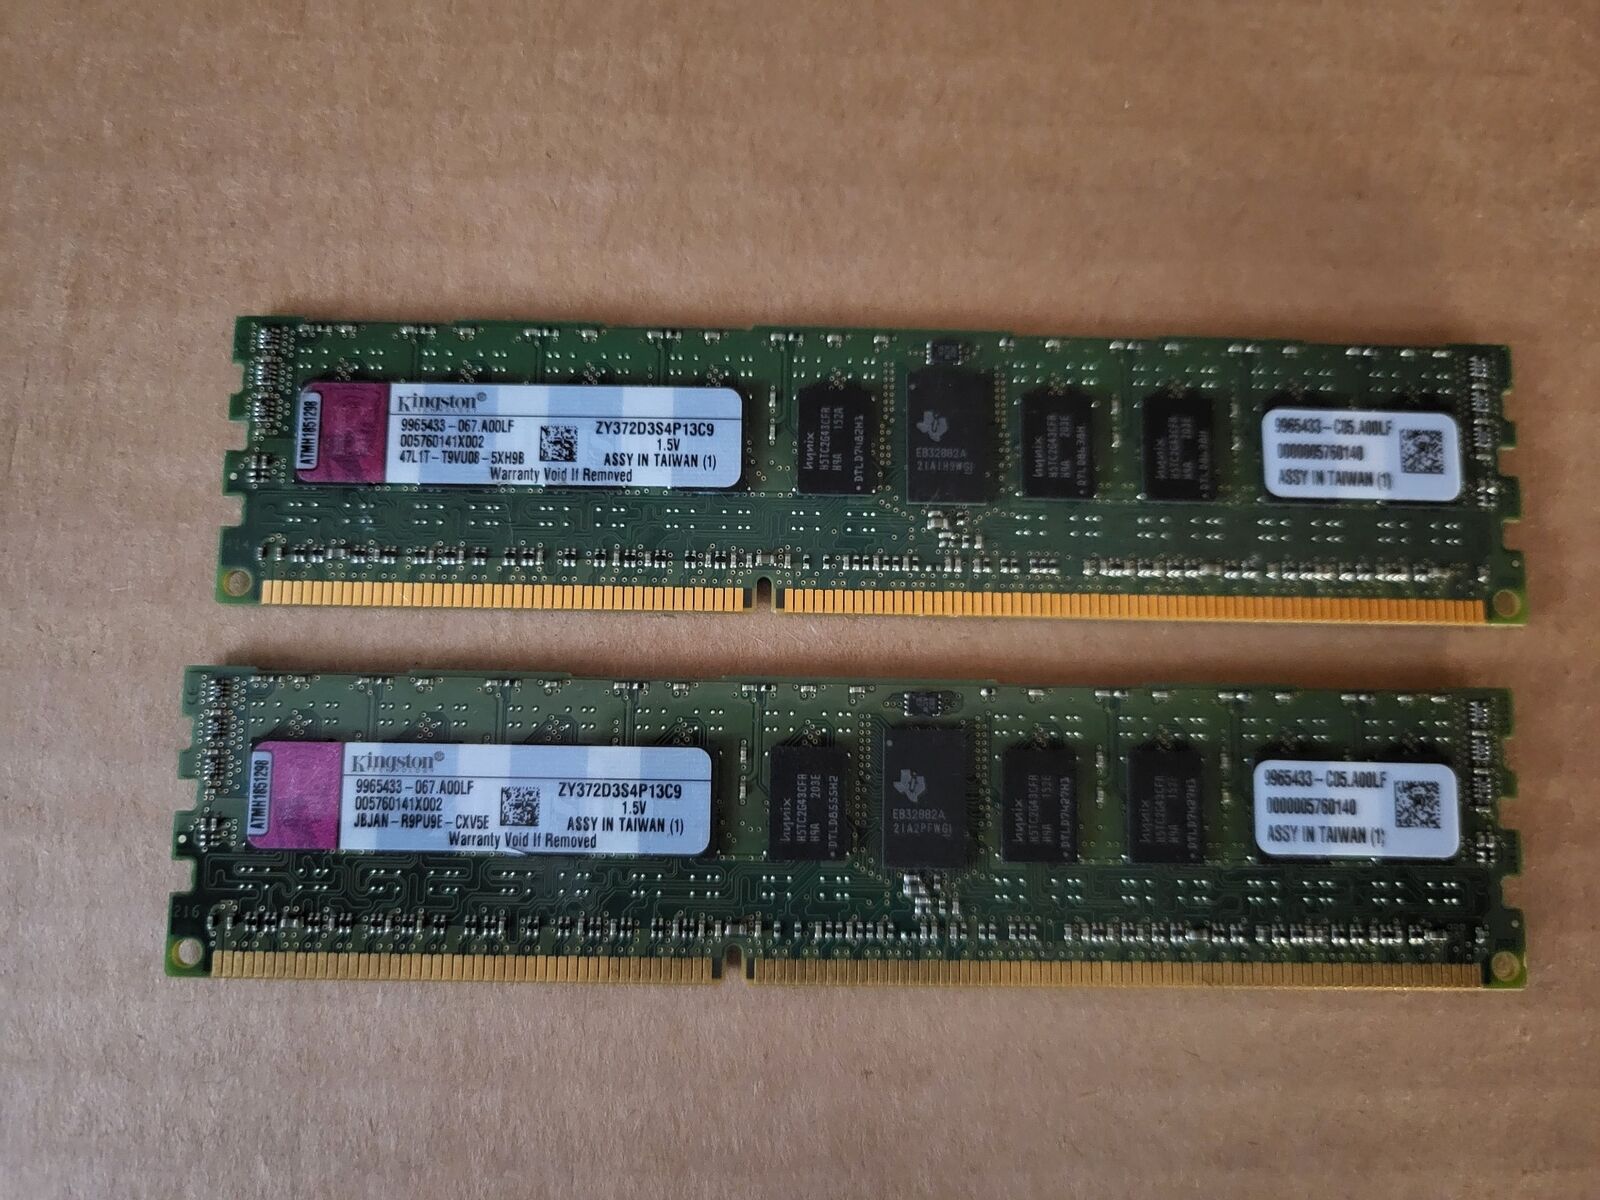 KINGSTON ZY372D3S4P13C9 8GB PC3-10600 DDR3-1333MHZ 240-PIN SERVER MEMORY B6-1(3)